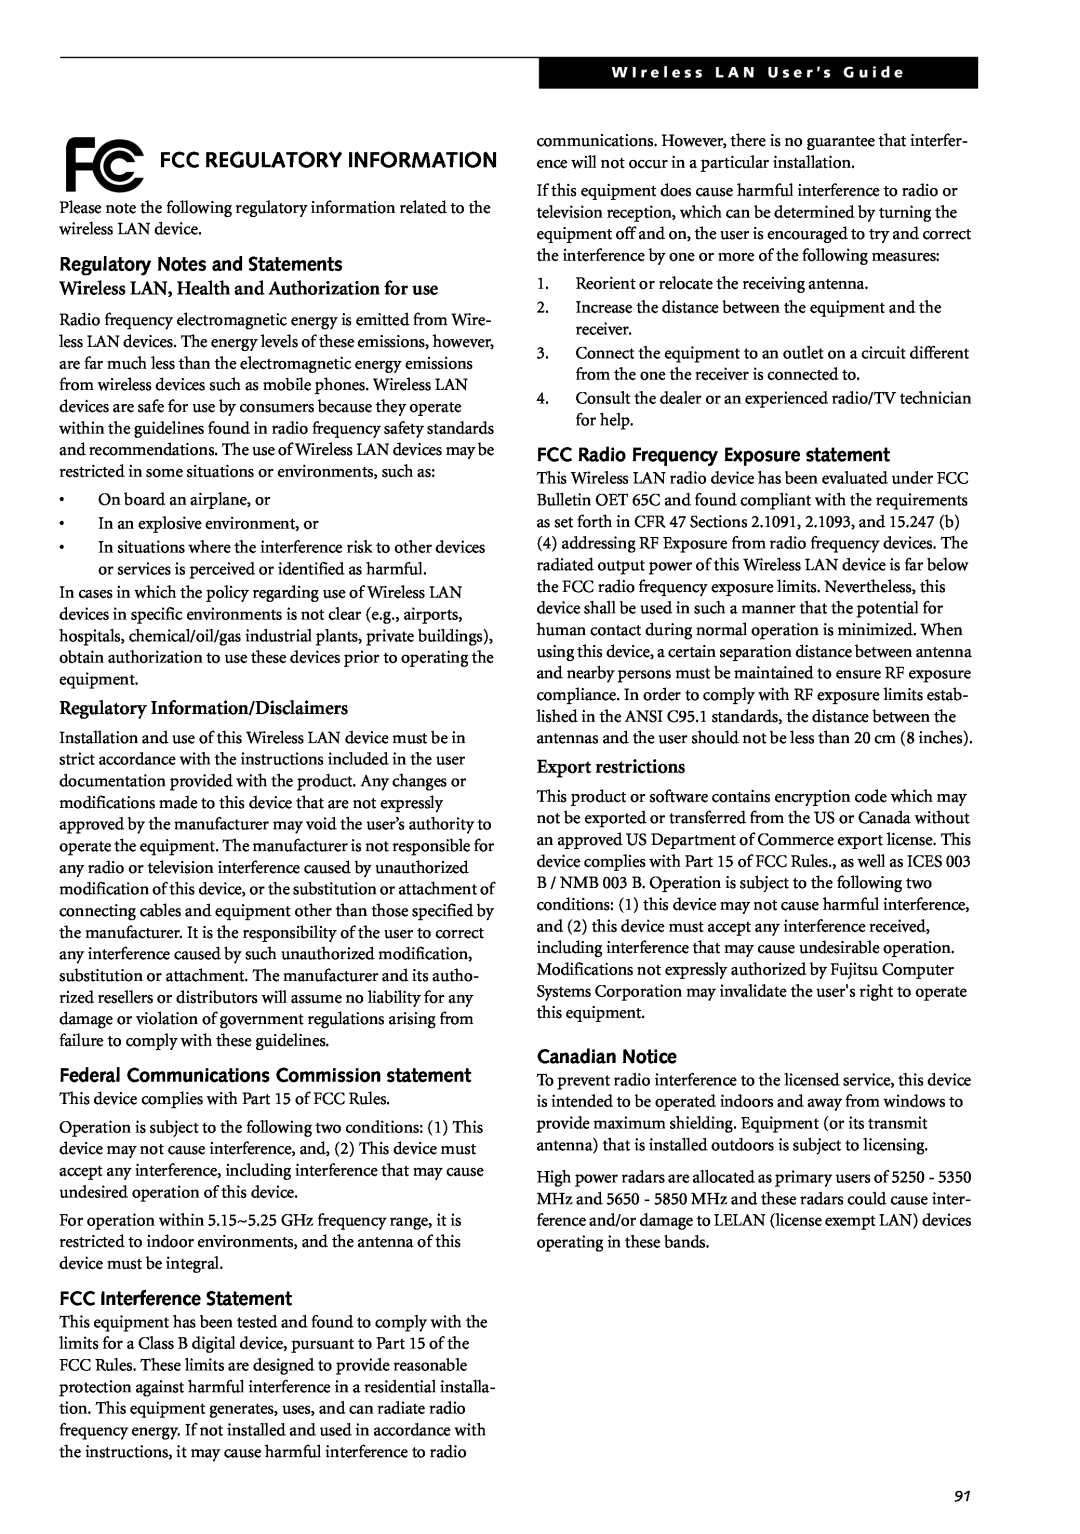 Fujitsu Siemens Computers S2210 Fcc Regulatory Information, Regulatory Notes and Statements, FCC Interference Statement 